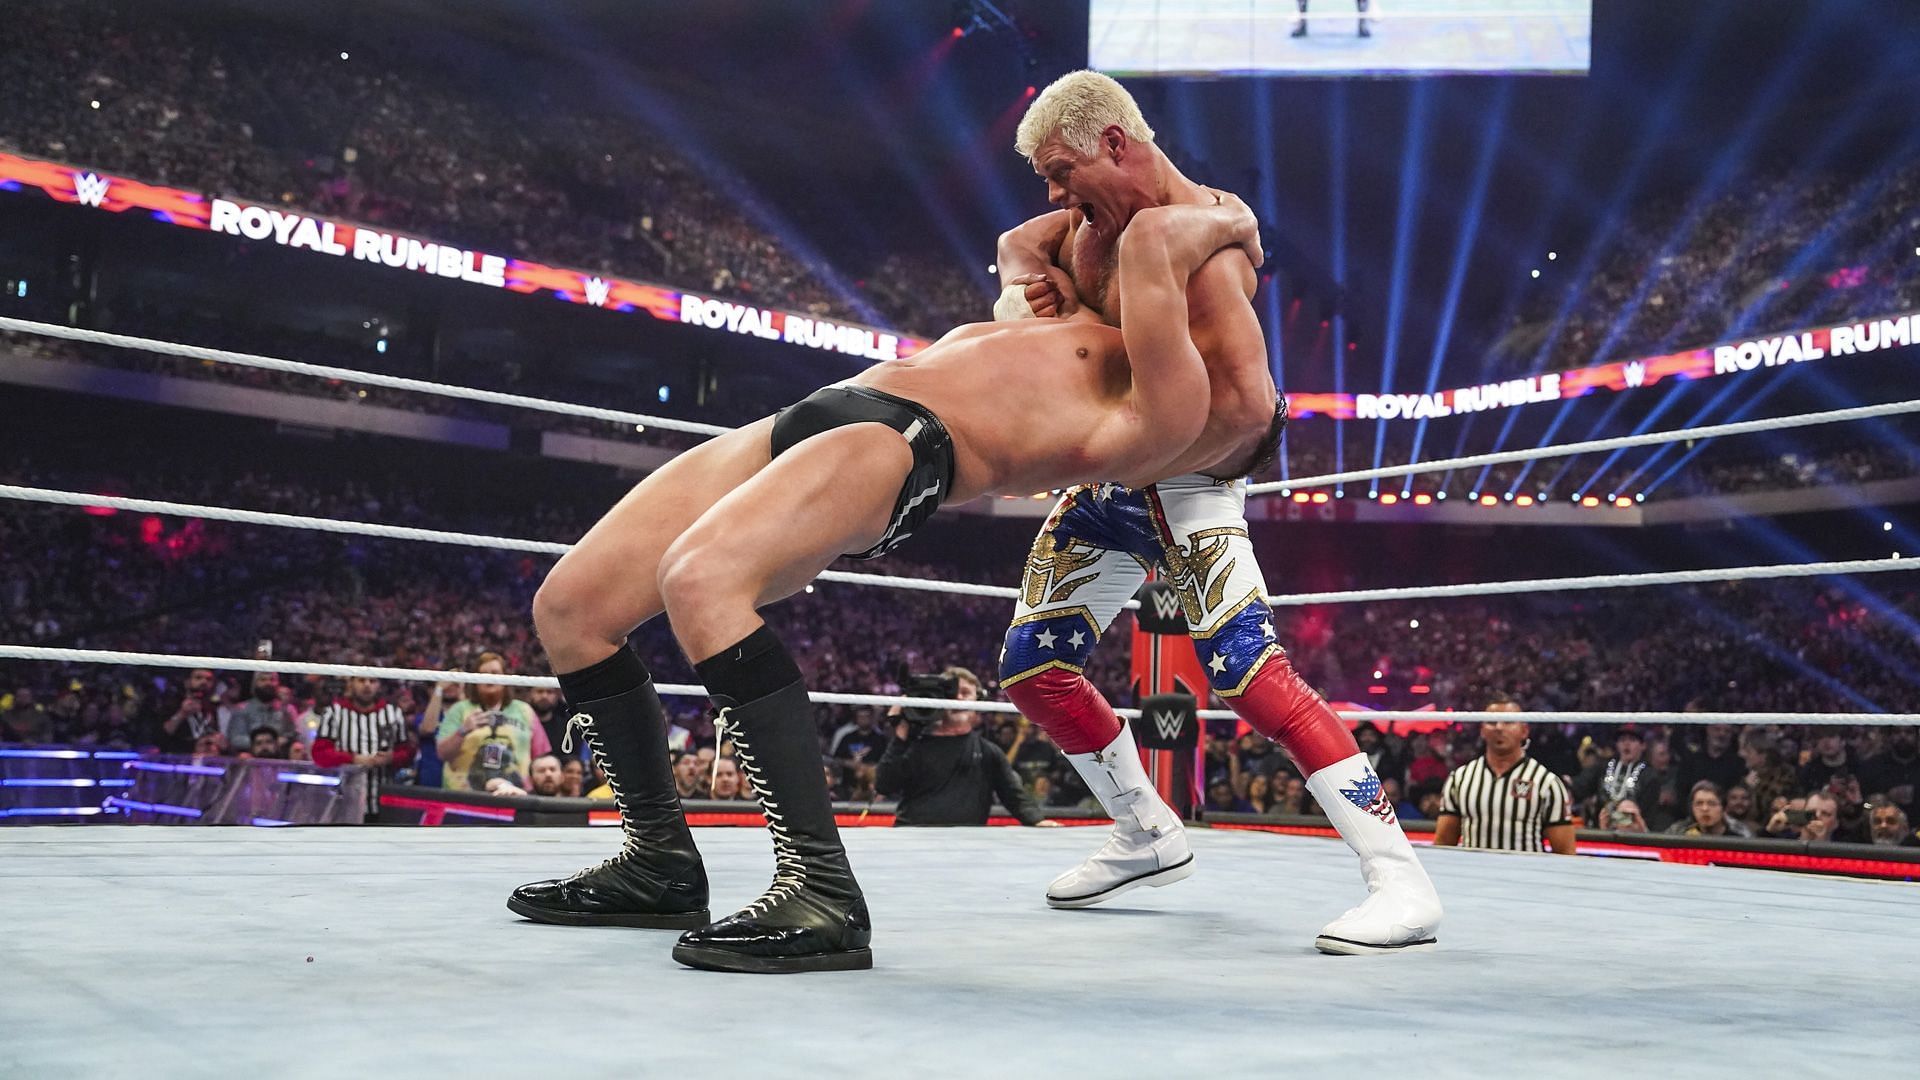 Cody Rhodes won the WWE Royal Rumble